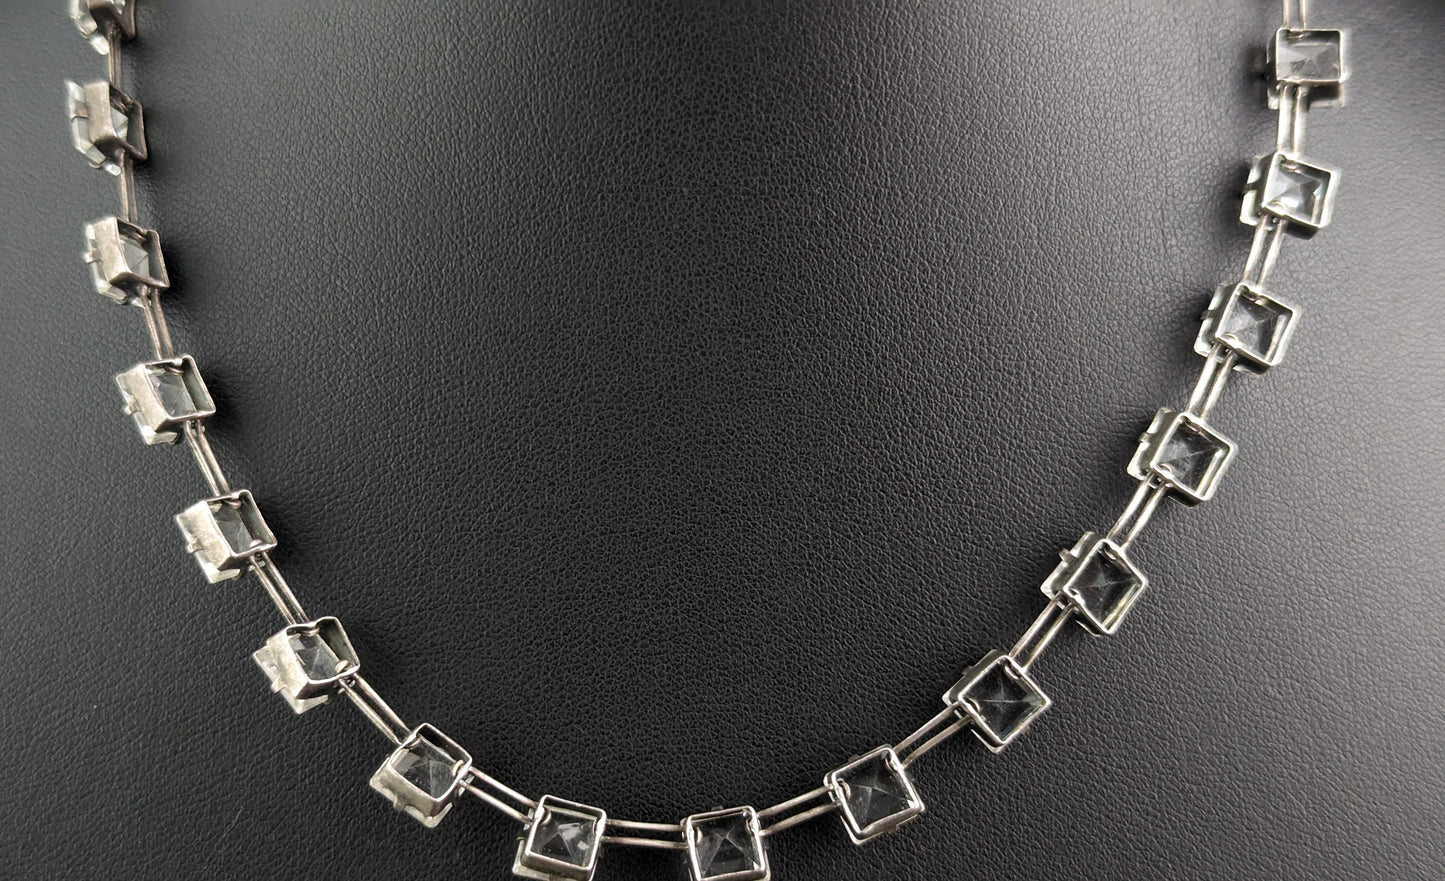 Vintage Art Deco square cut Paste Riviere necklace, sterling silver